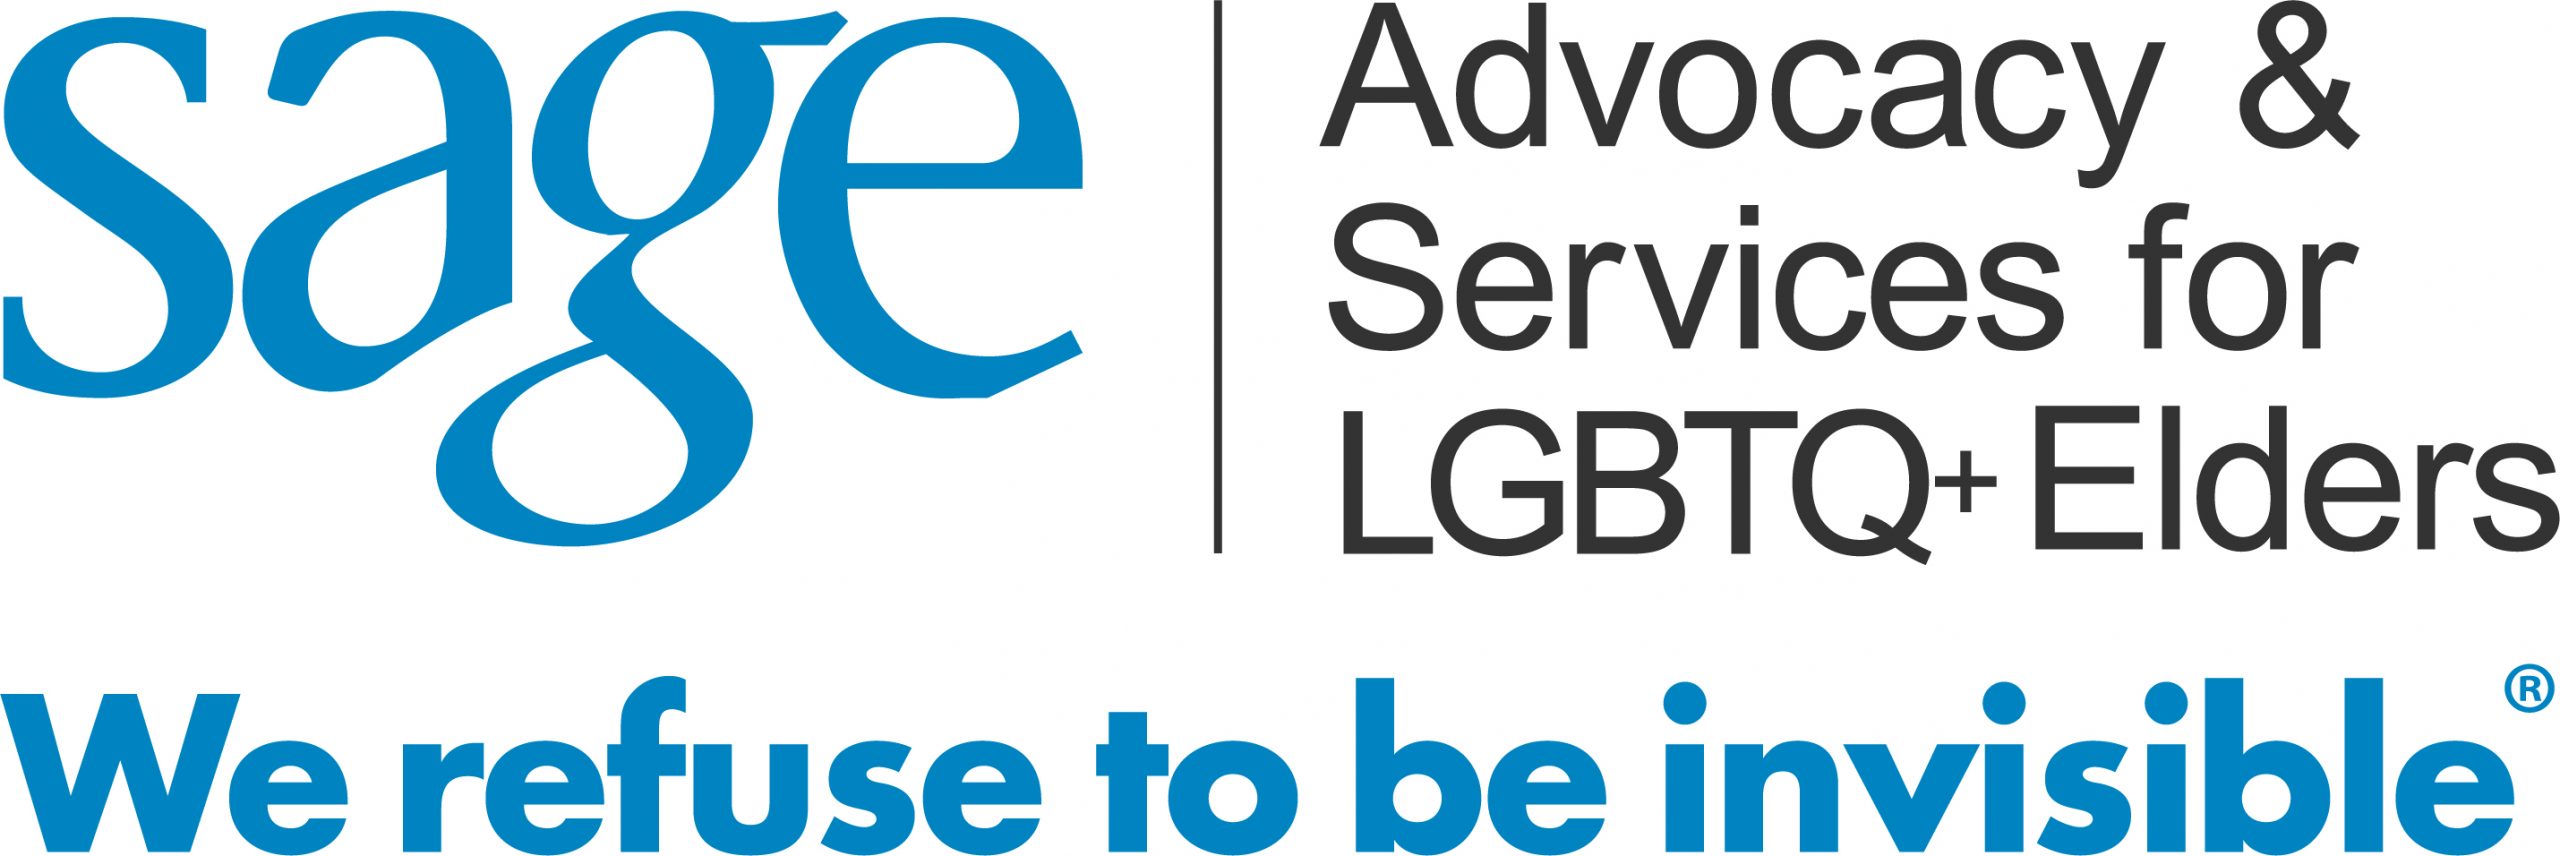 SAGE – Advocacy & Services for LGBTQ+ Elders